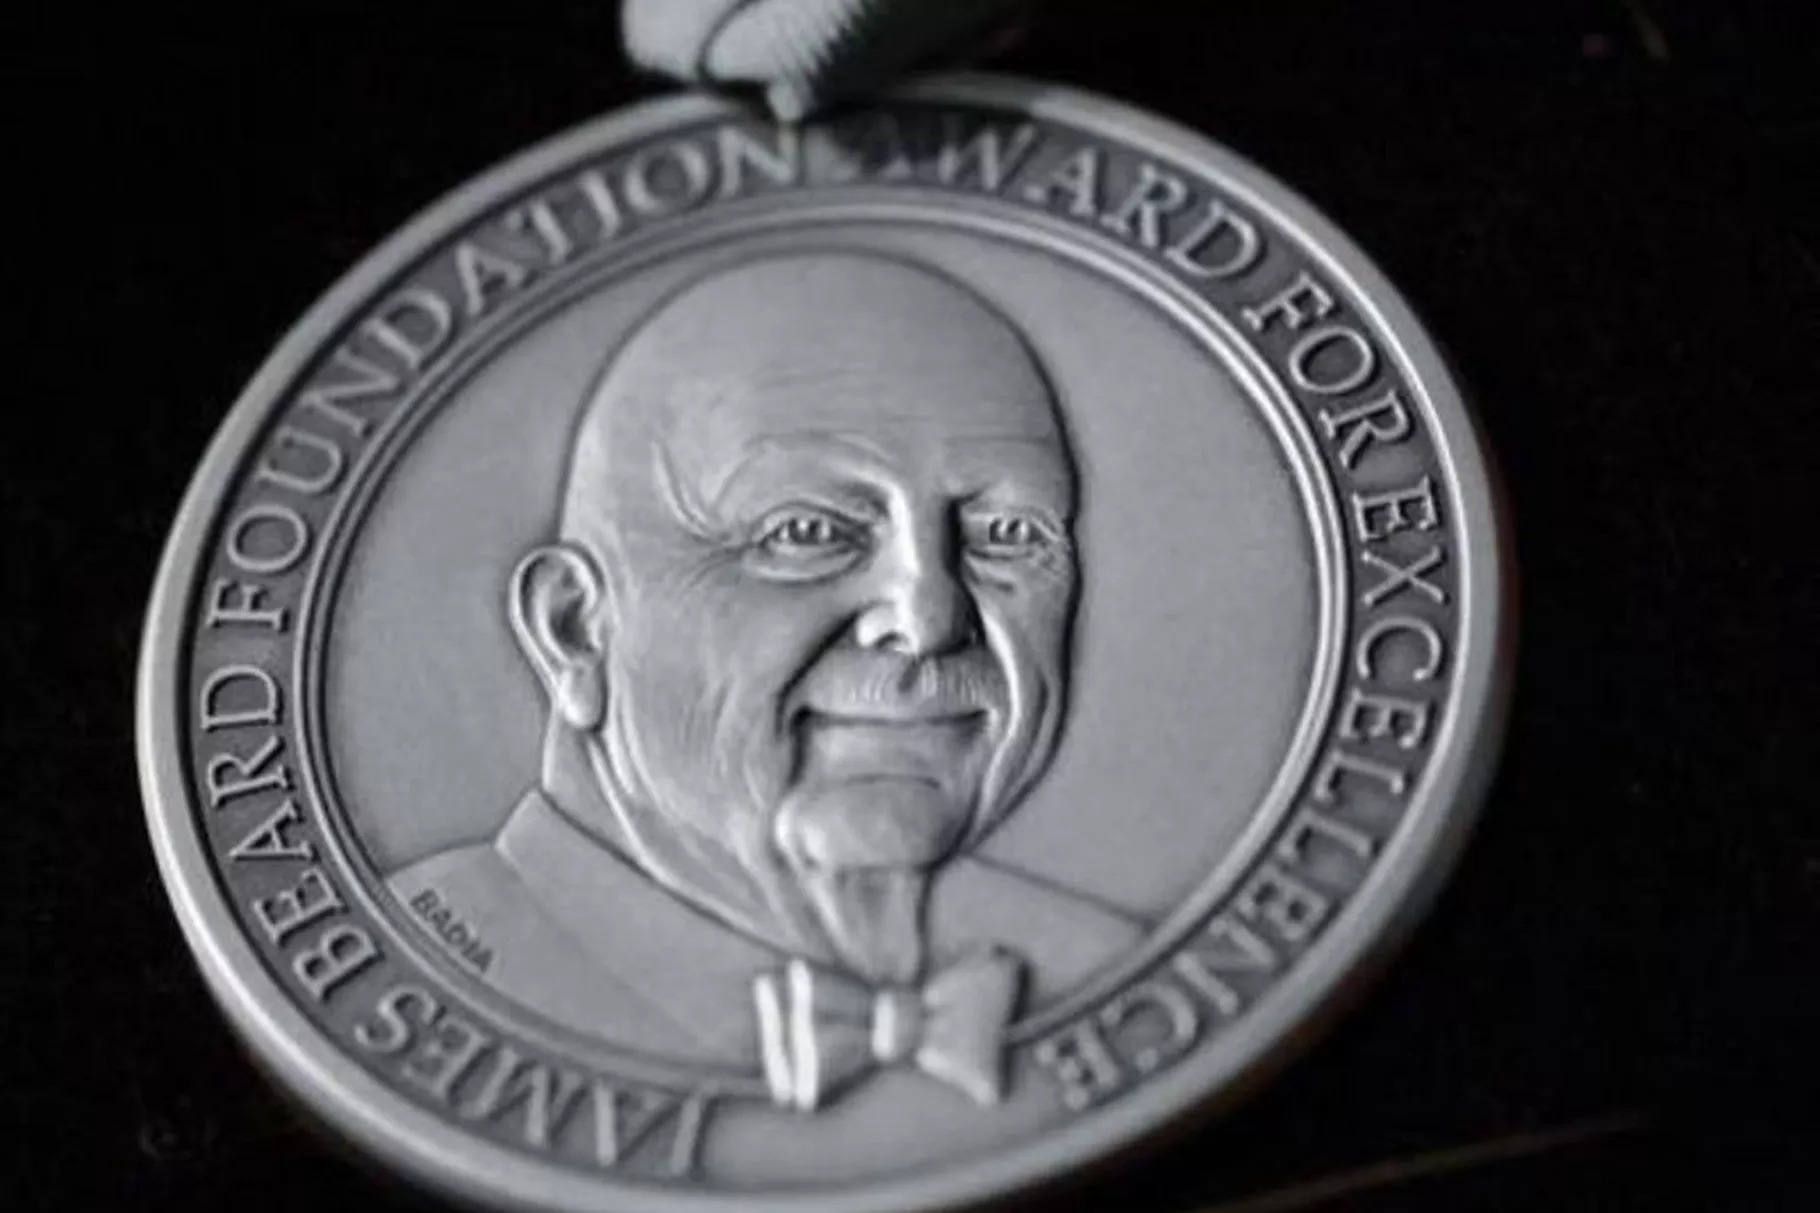 A silver James Beard Awards medal featuring James Beard’s face at center and the words “James Beard Foundation Award for Excellence” along the border.